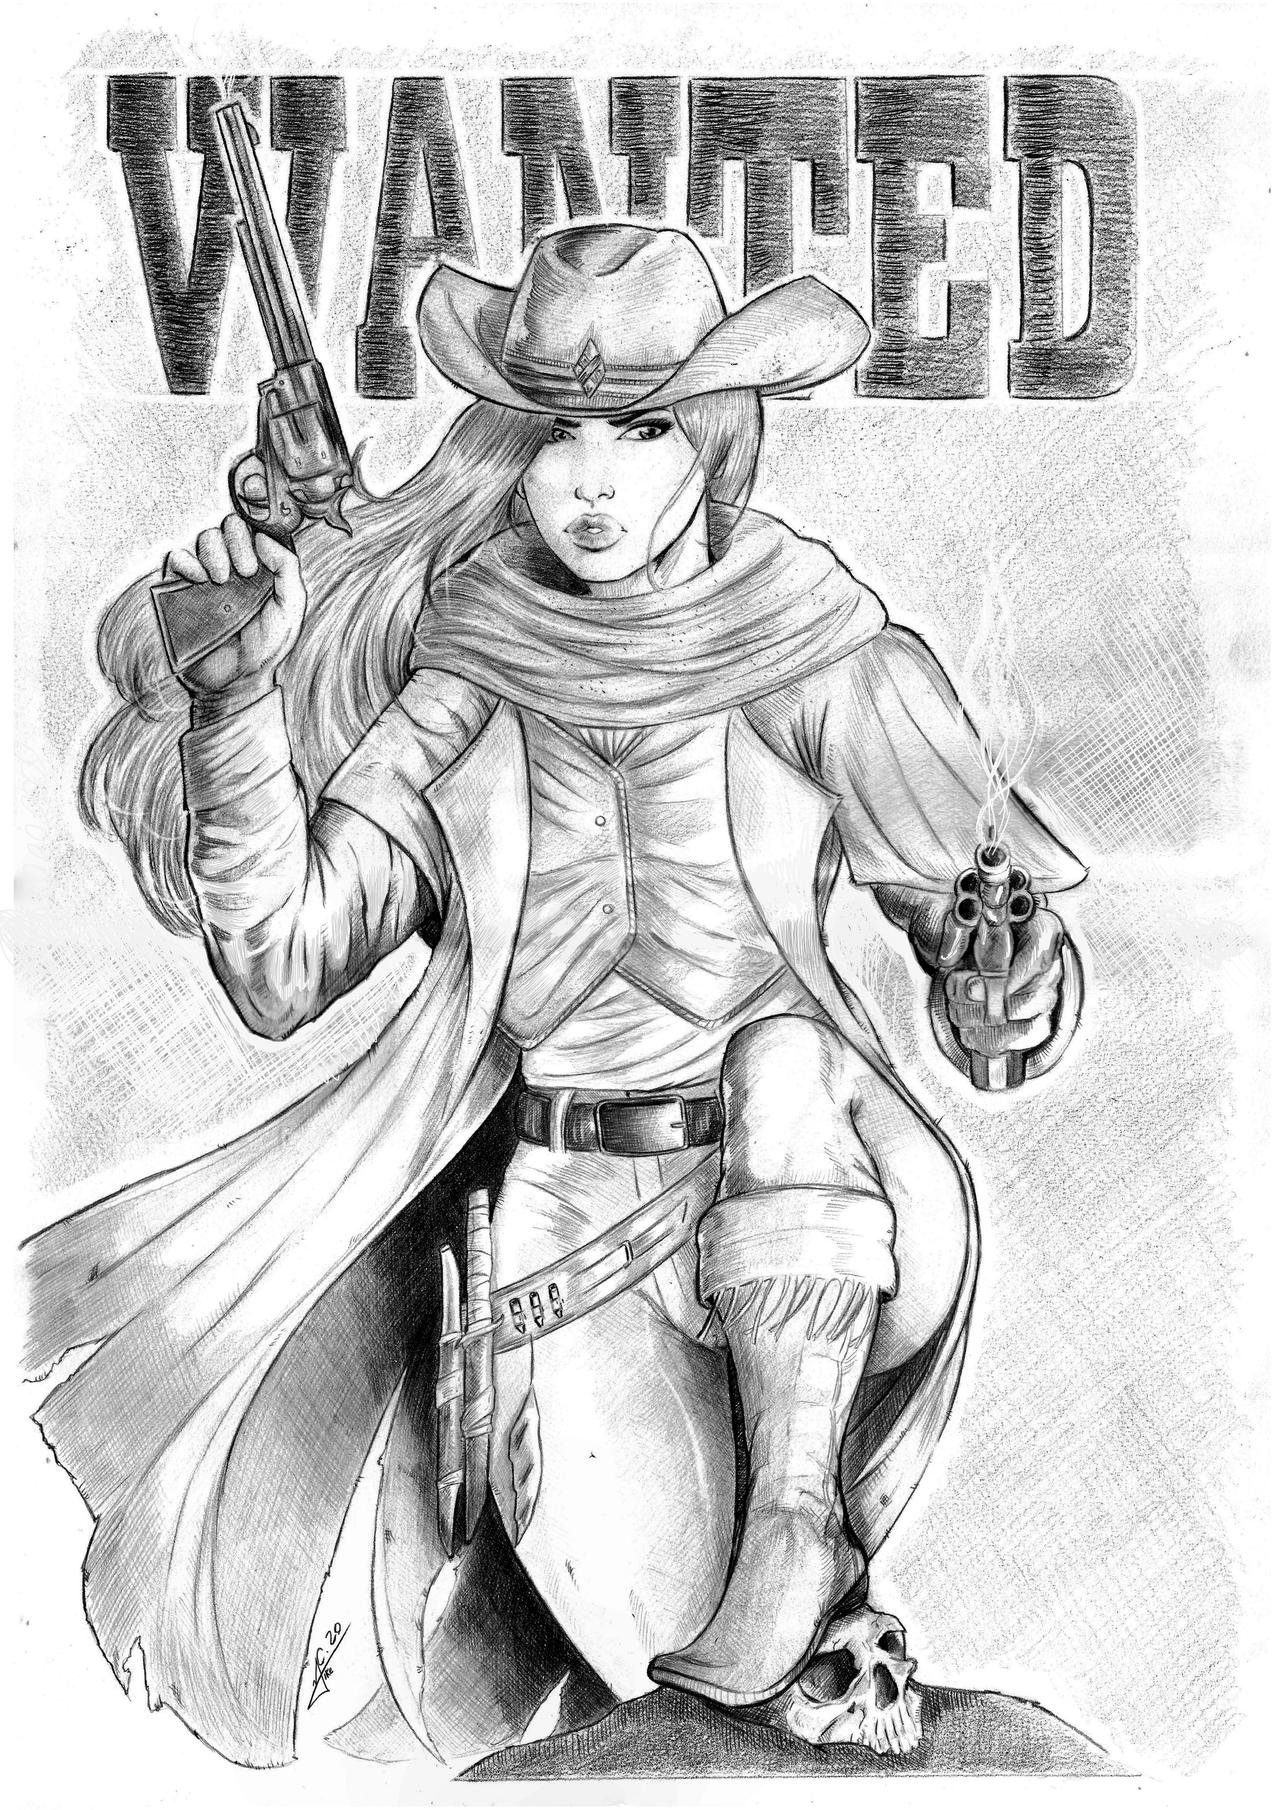 Western Girl by MIKEMETALARTS on DeviantArt